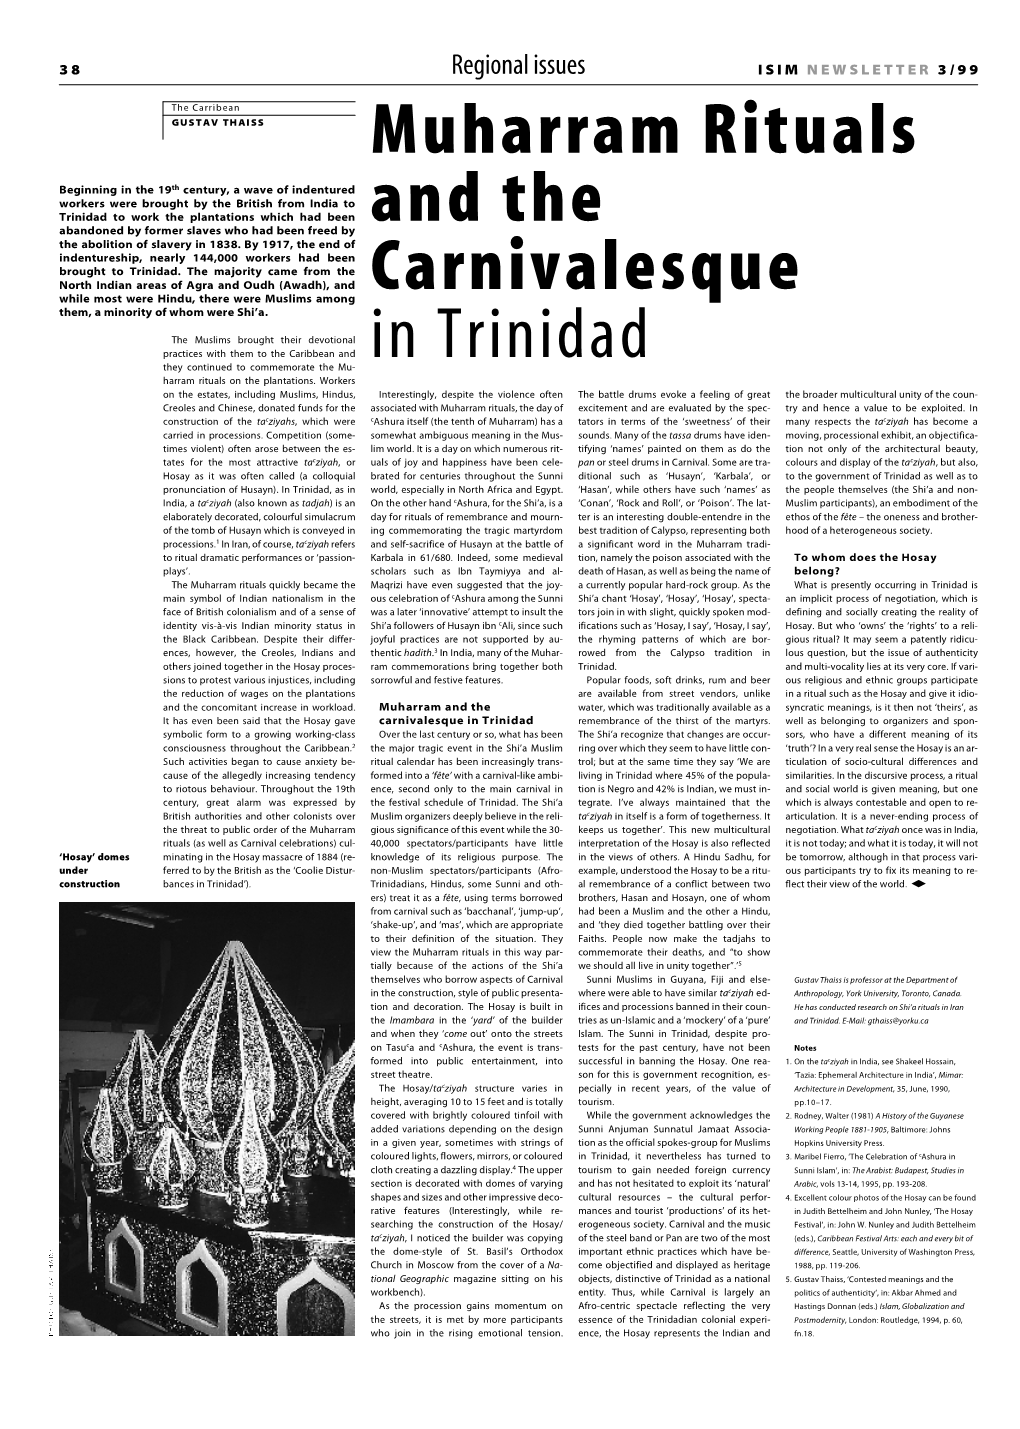 Muharram Rituals and the Carnivalesque in Trinidad